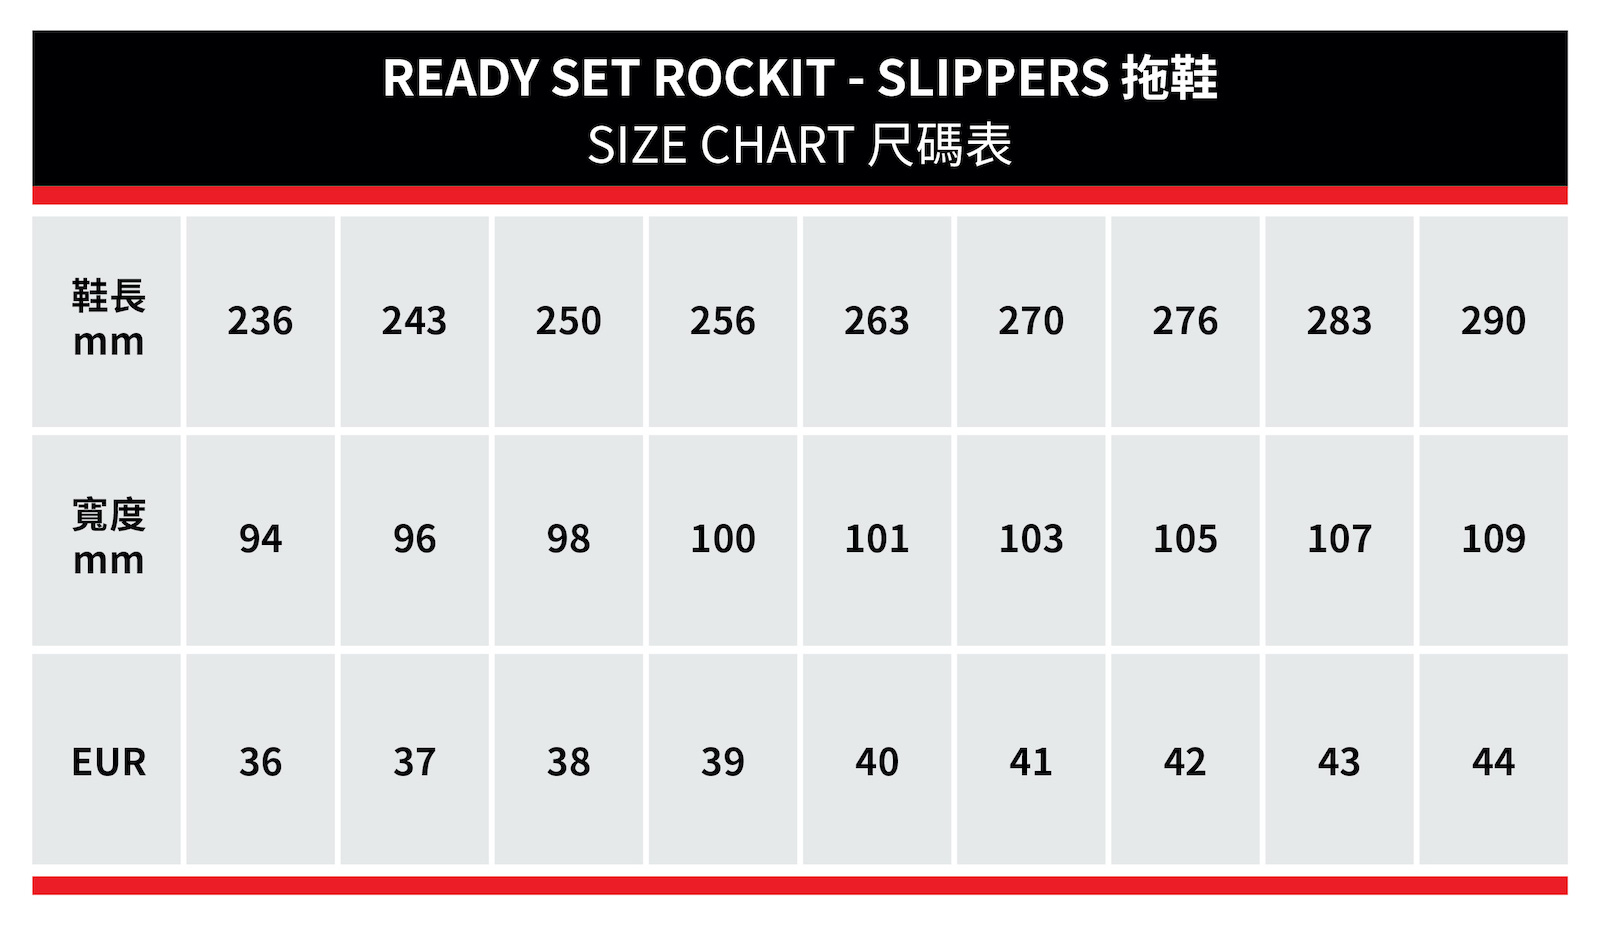 READY SET ROCKIT - Slippers (Value: HK$180)